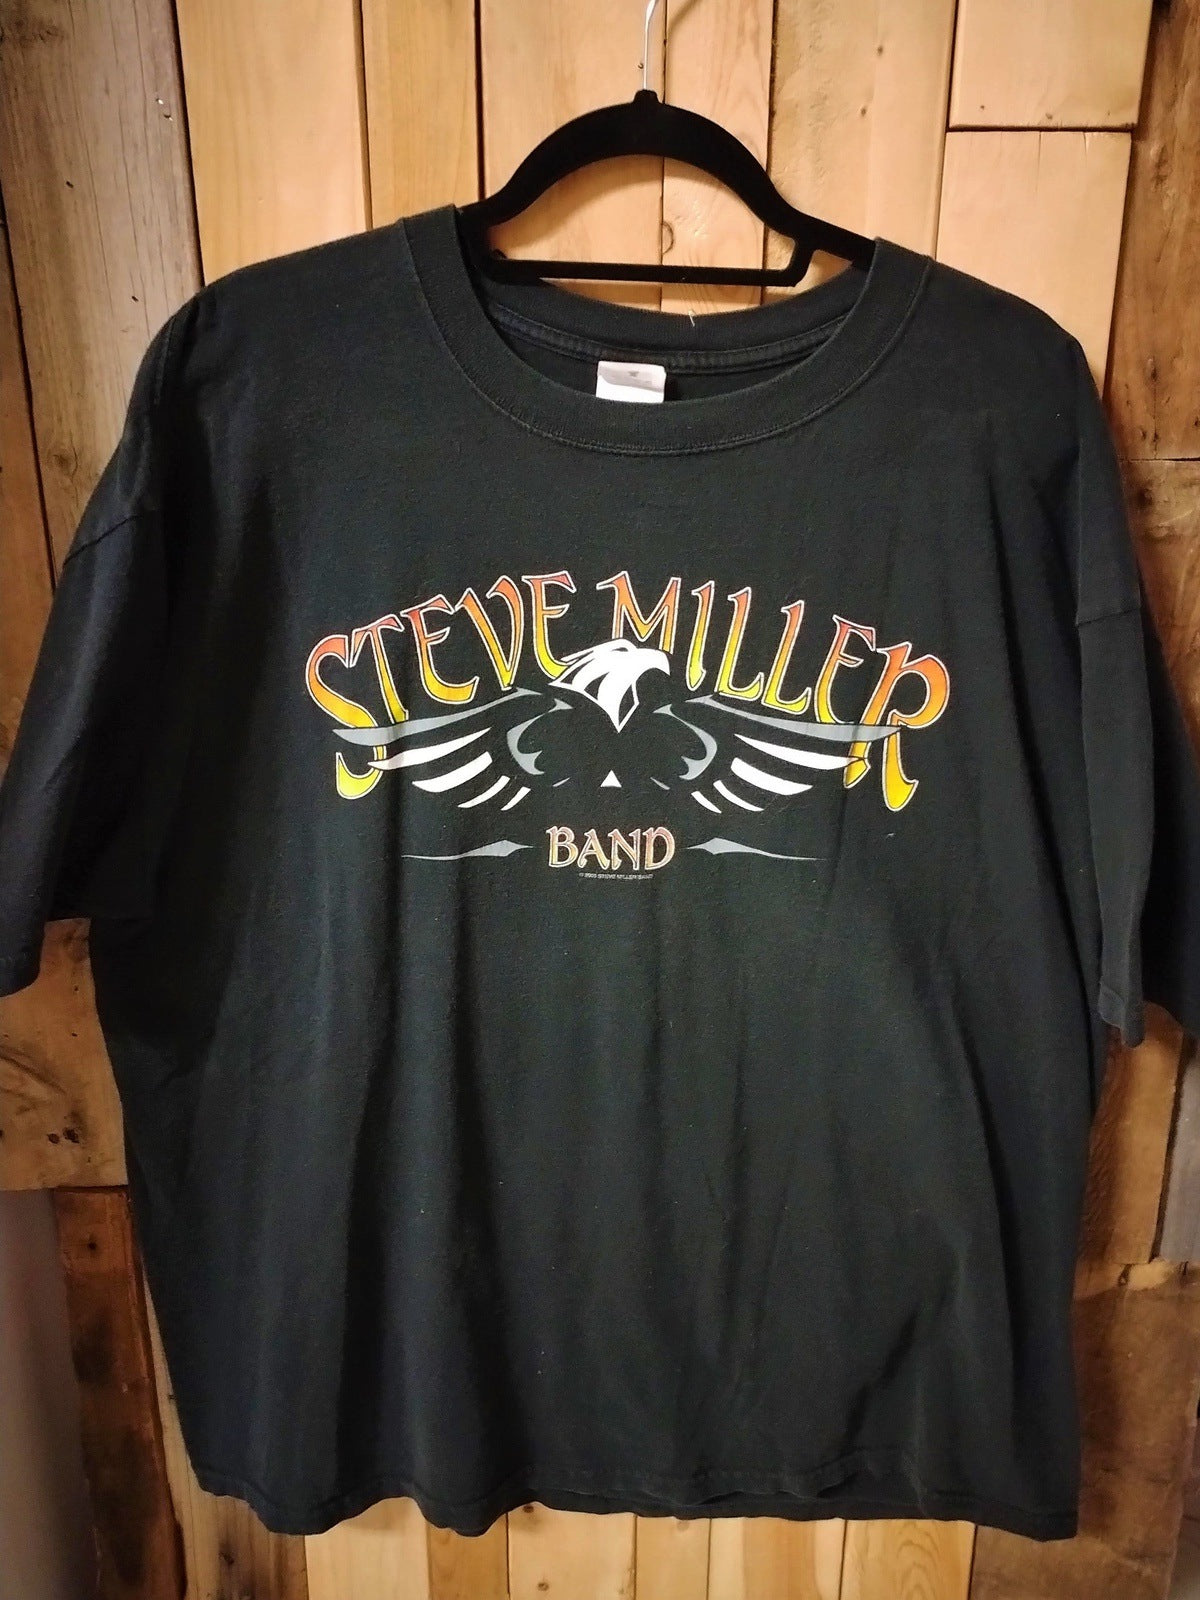 Steve Miller Band "Fly Like An Eagle" T Shirt Size 2XL